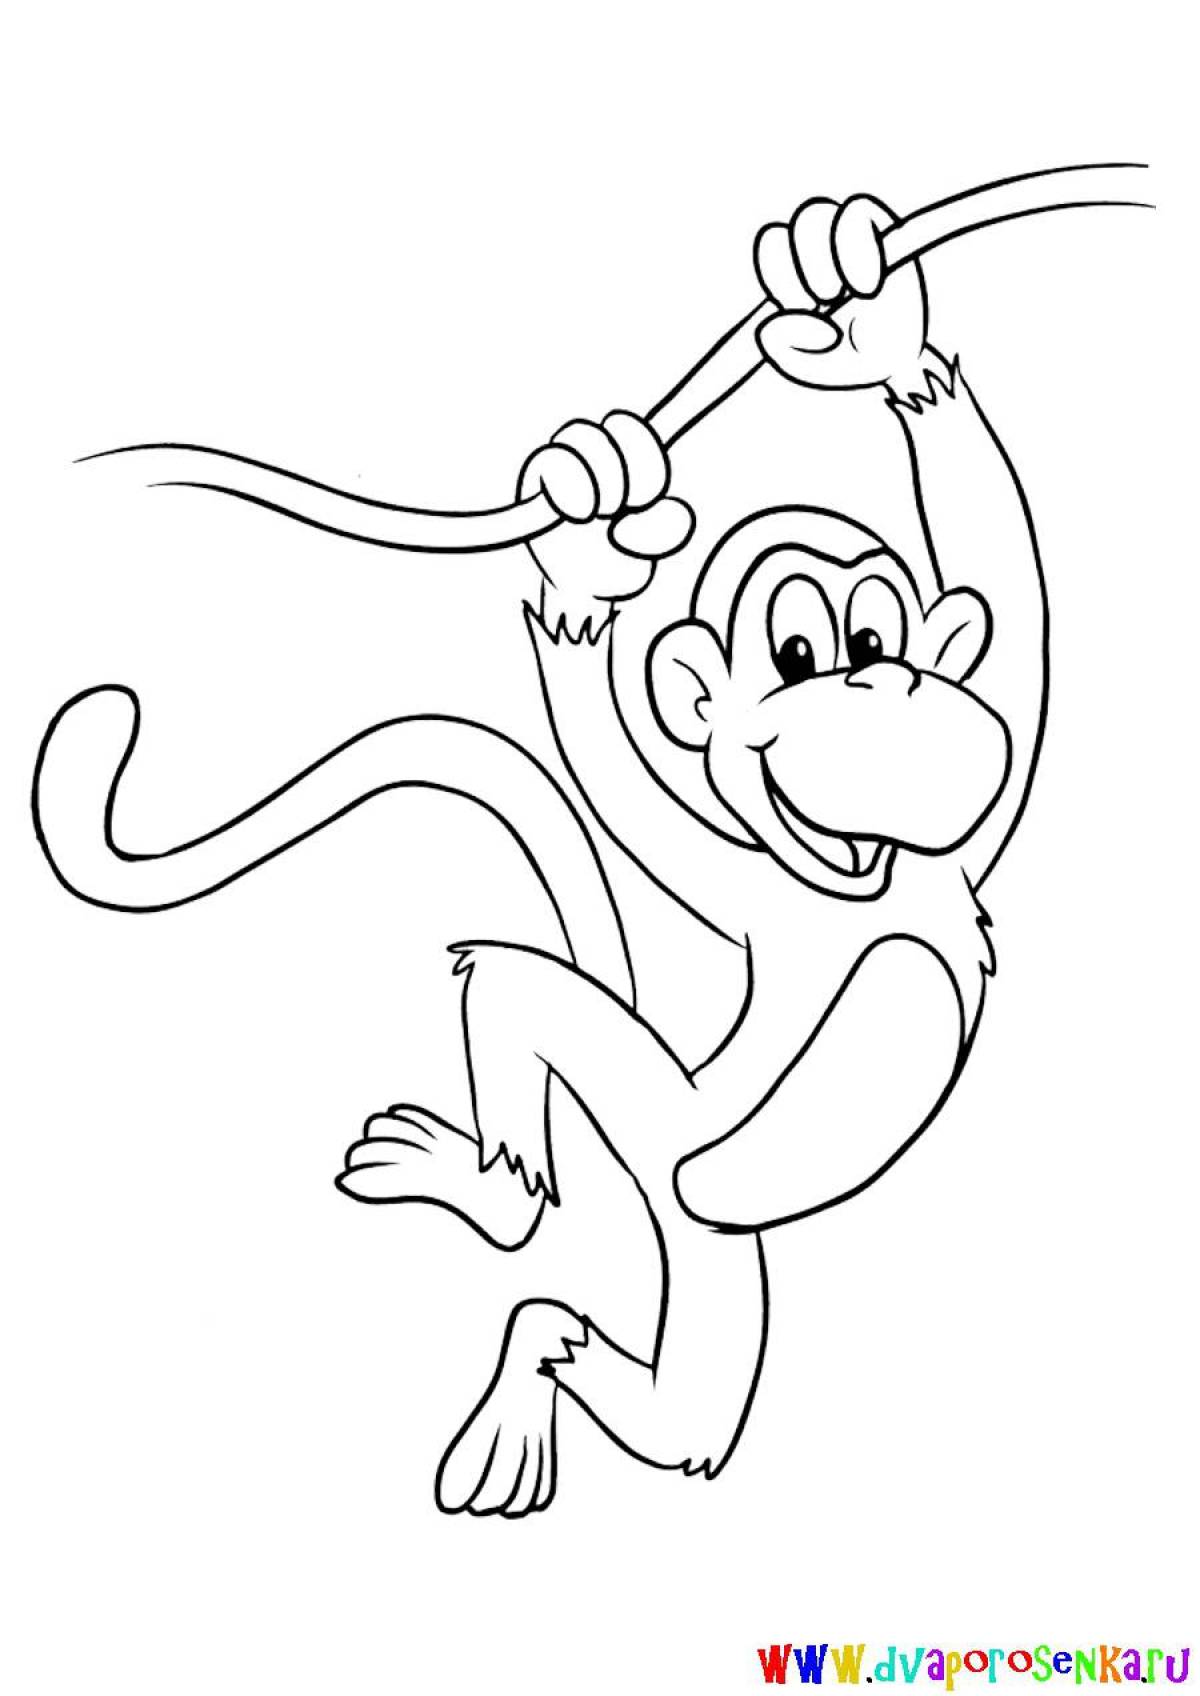 Sassy monkey coloring book